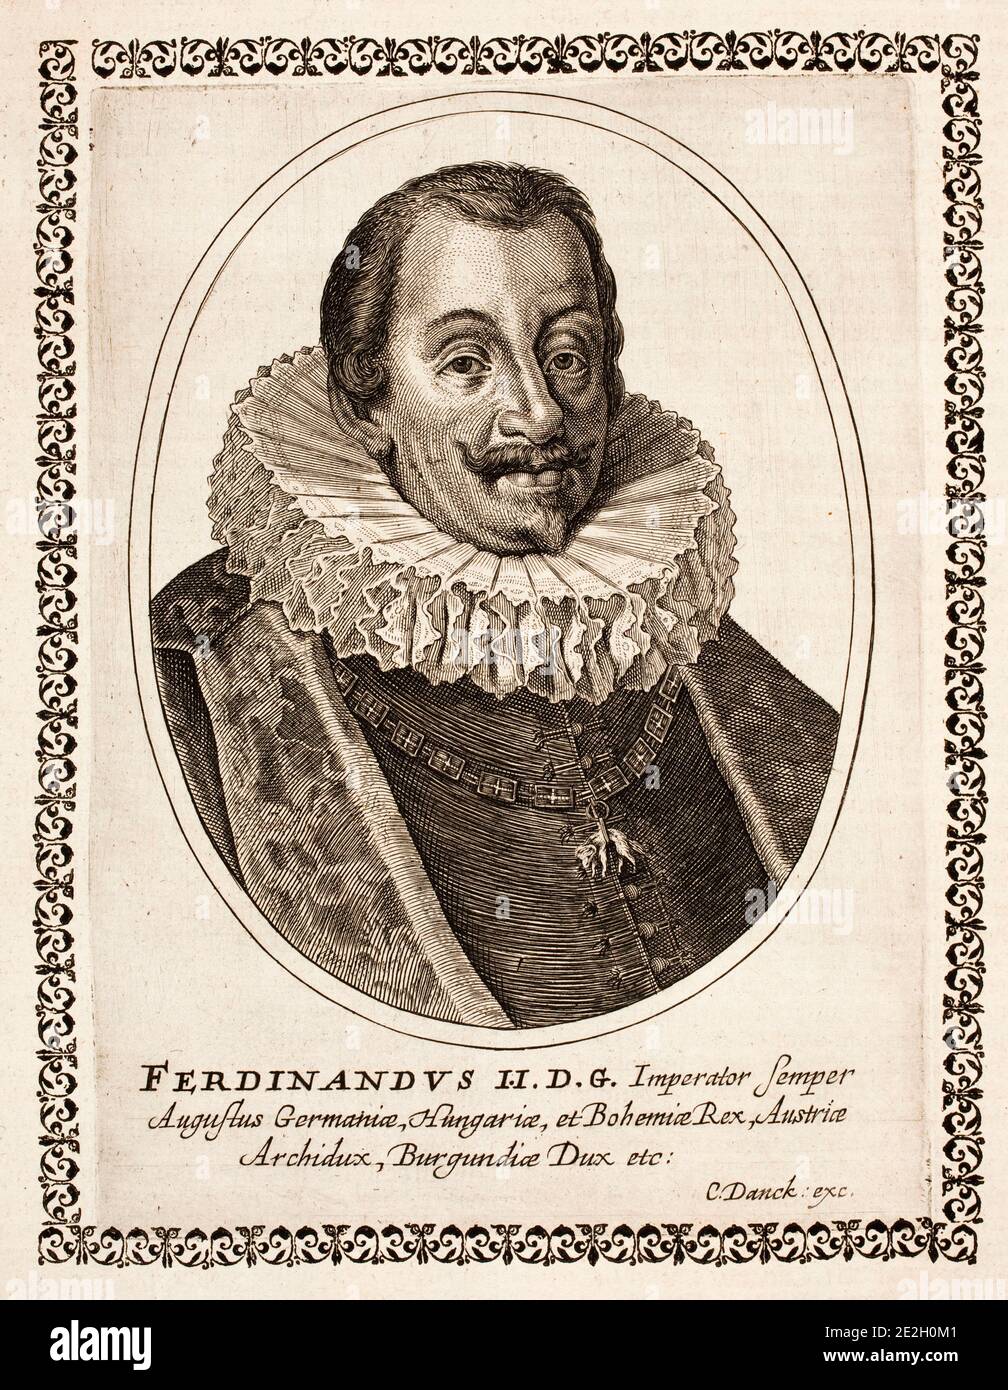 Euroean ruler of 16-17th centuries. Portrait of Ferdinand II, Holy Roman Emperor (1578-1637). Amsterdam, 1642 Stock Photo